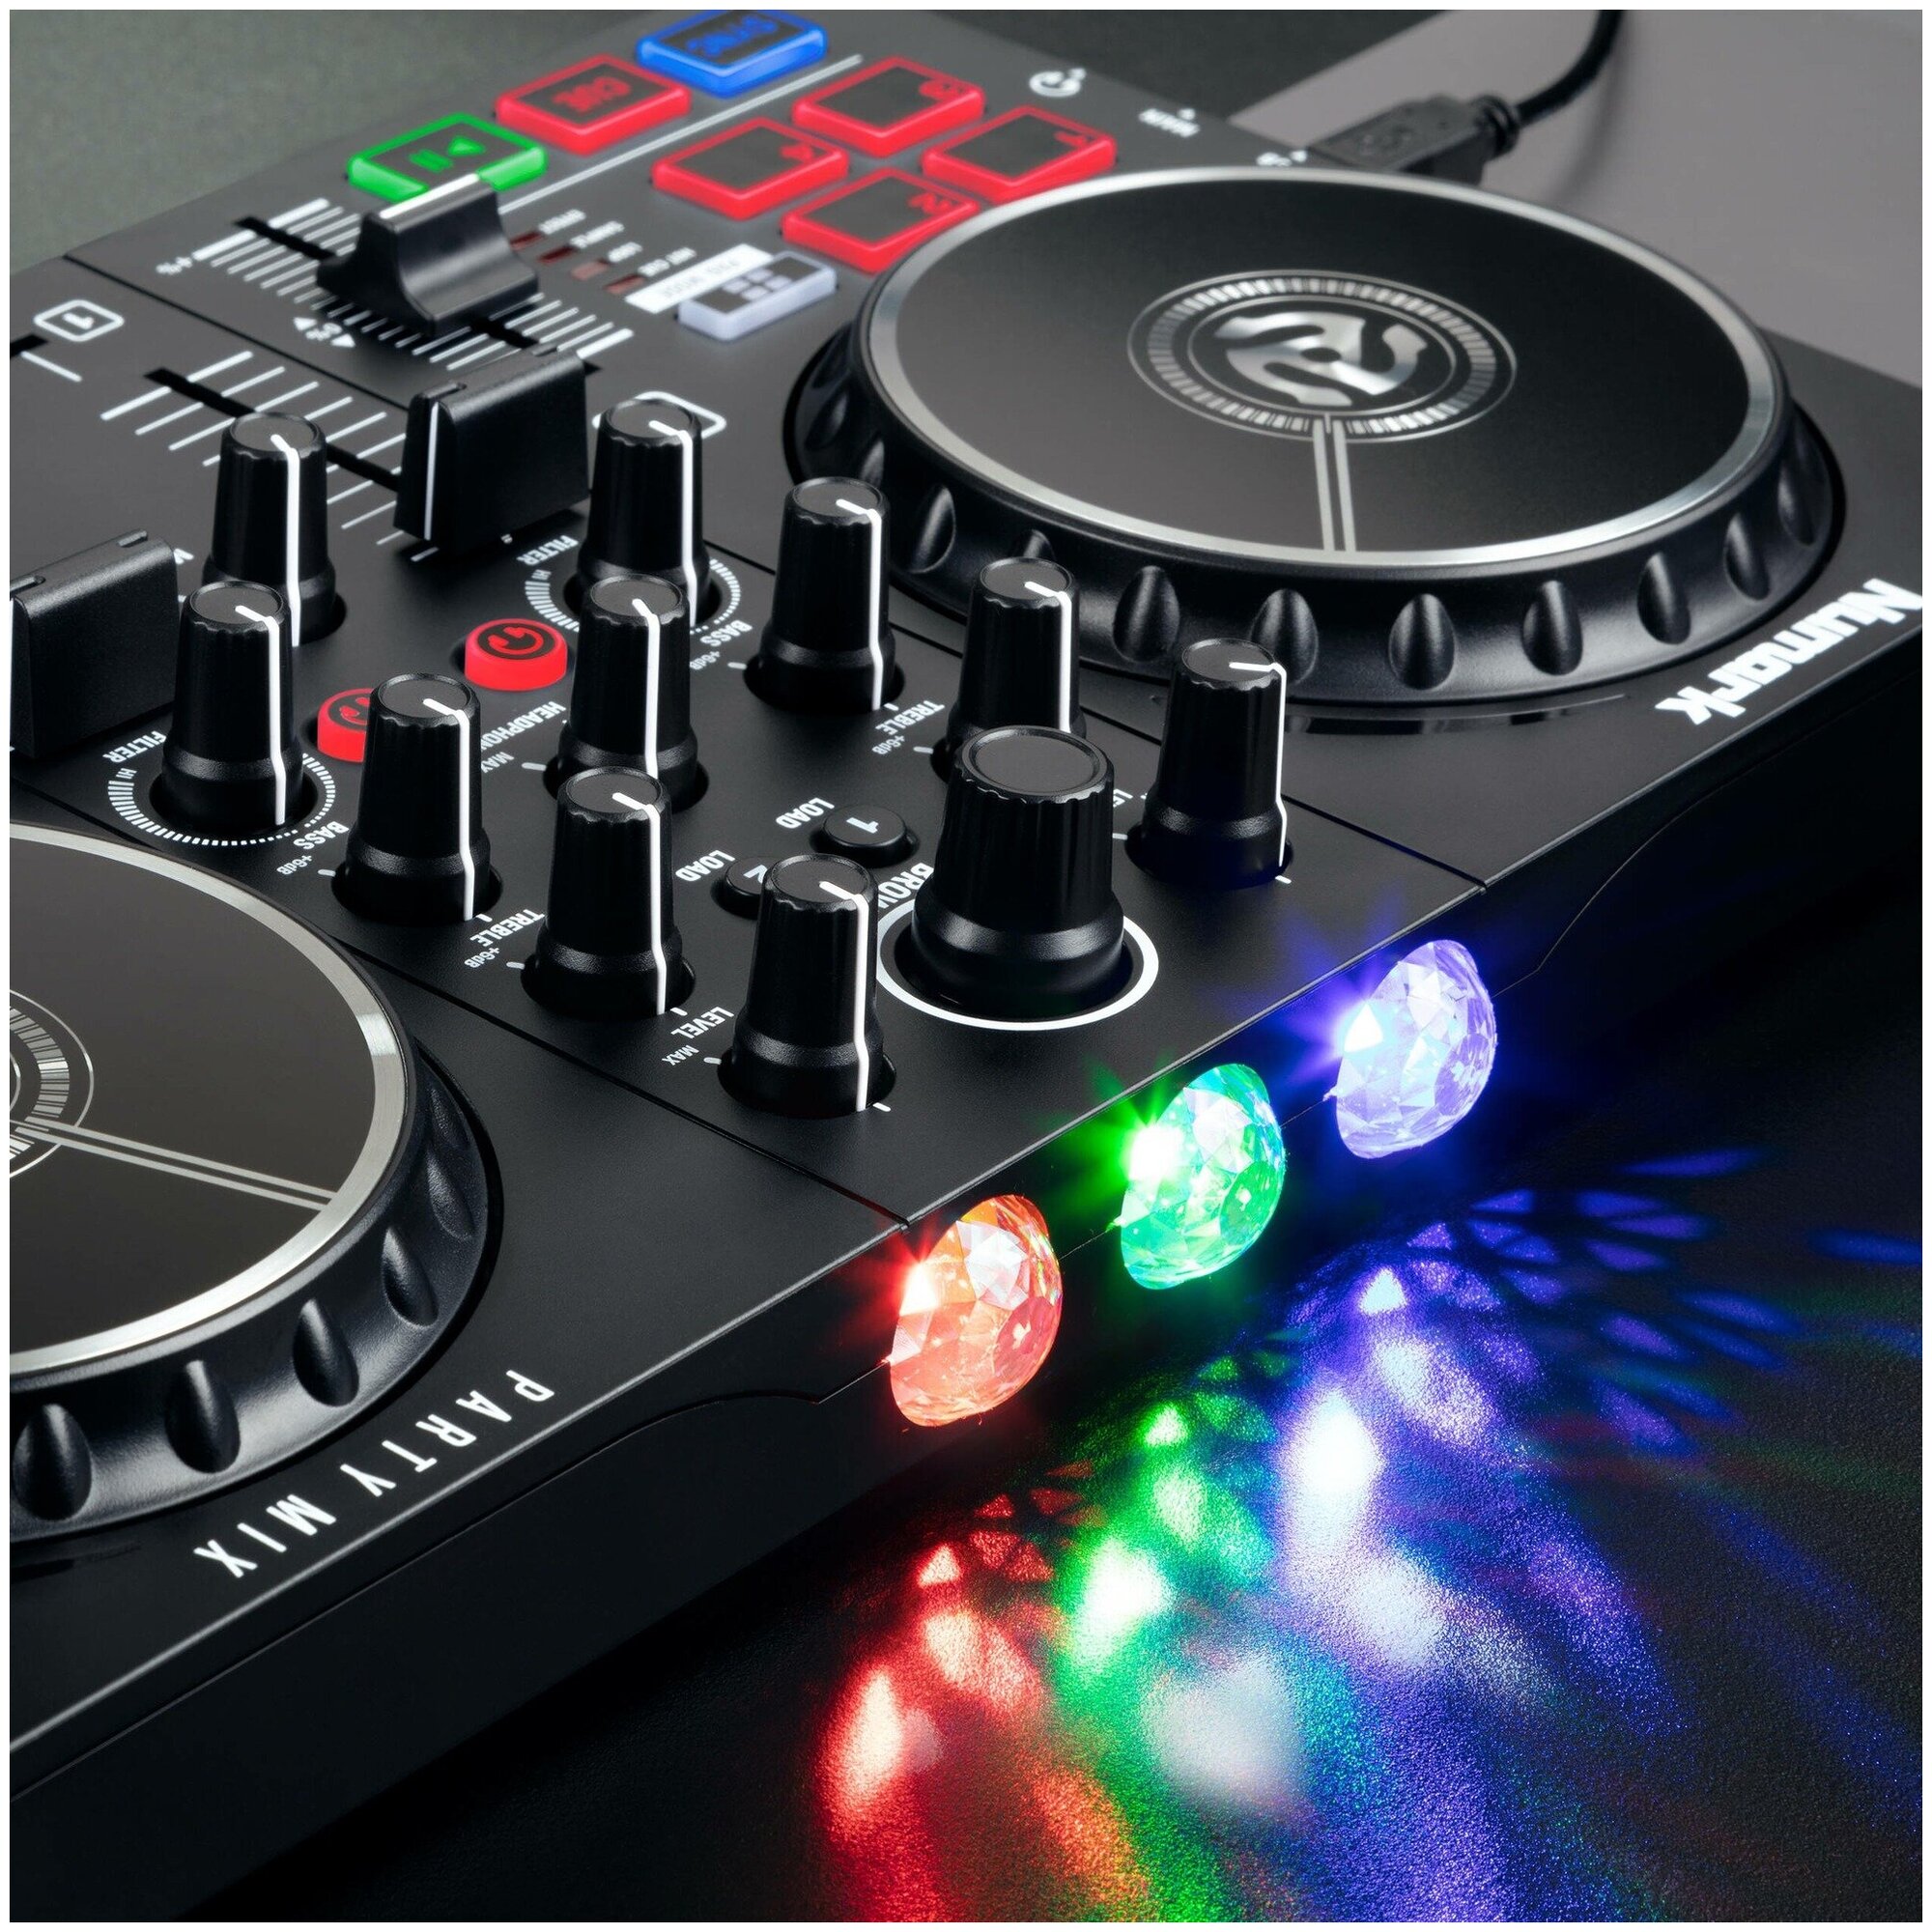 DJ-контроллер NUMARK PARTY MIX II